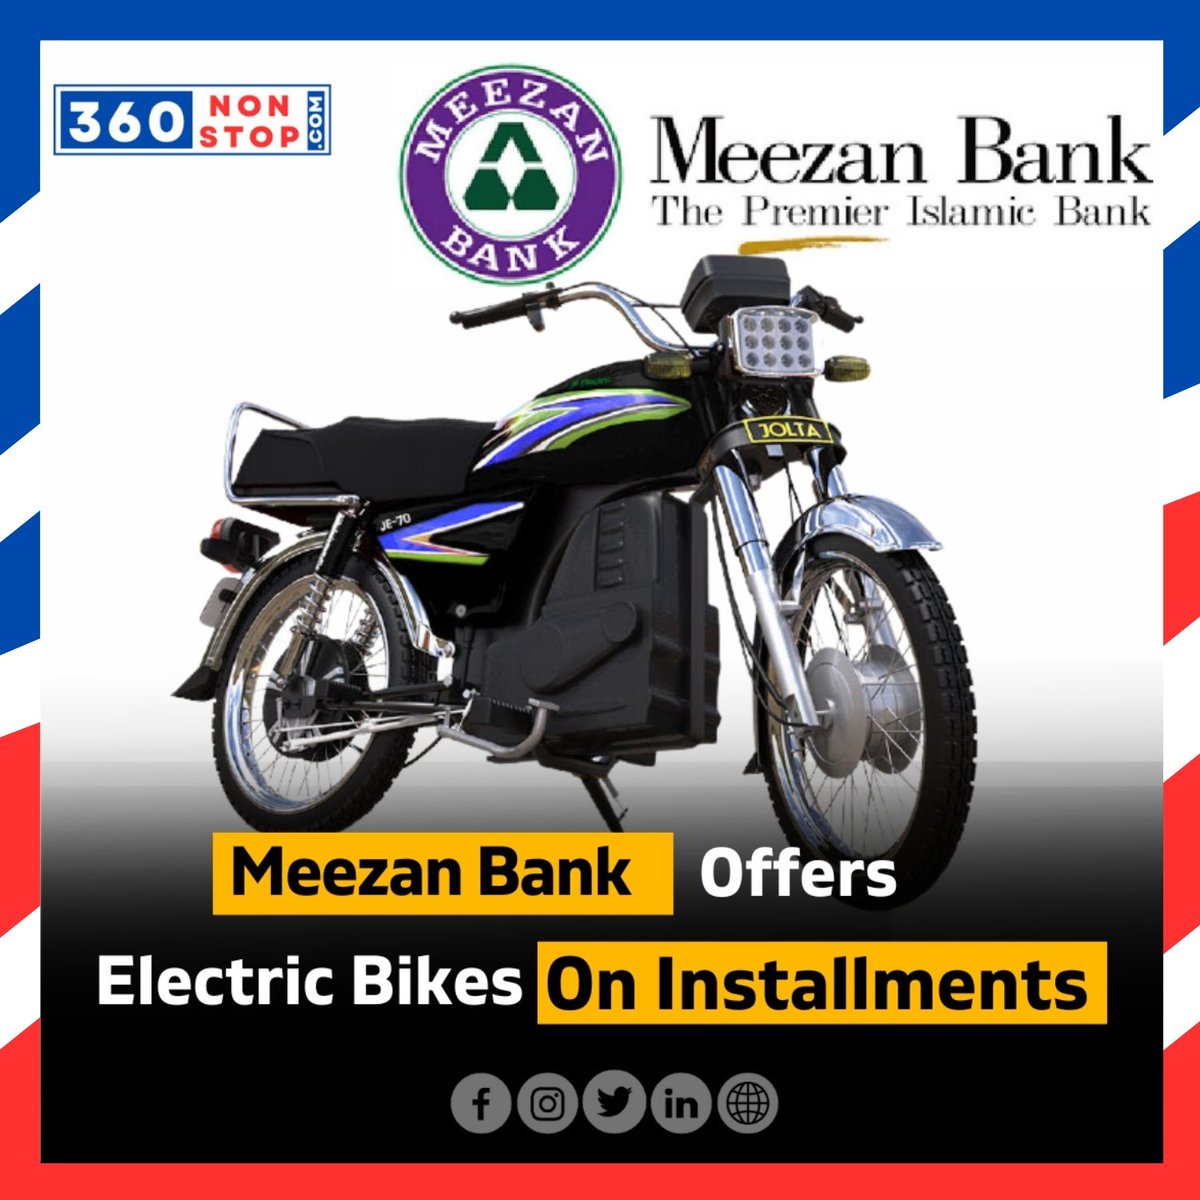 Meezan Bank Offeres Electric Bikes on Installments.

#MeezanBank #ElectricBikes #InstallmentOffer #EcoFriendlyTransportation #GreenMobility #SustainableTransport #BikeFinancing #E-BikeOffer #AffordableTransportation #MeezanBankOffer #CleanEnergy #360nonstop